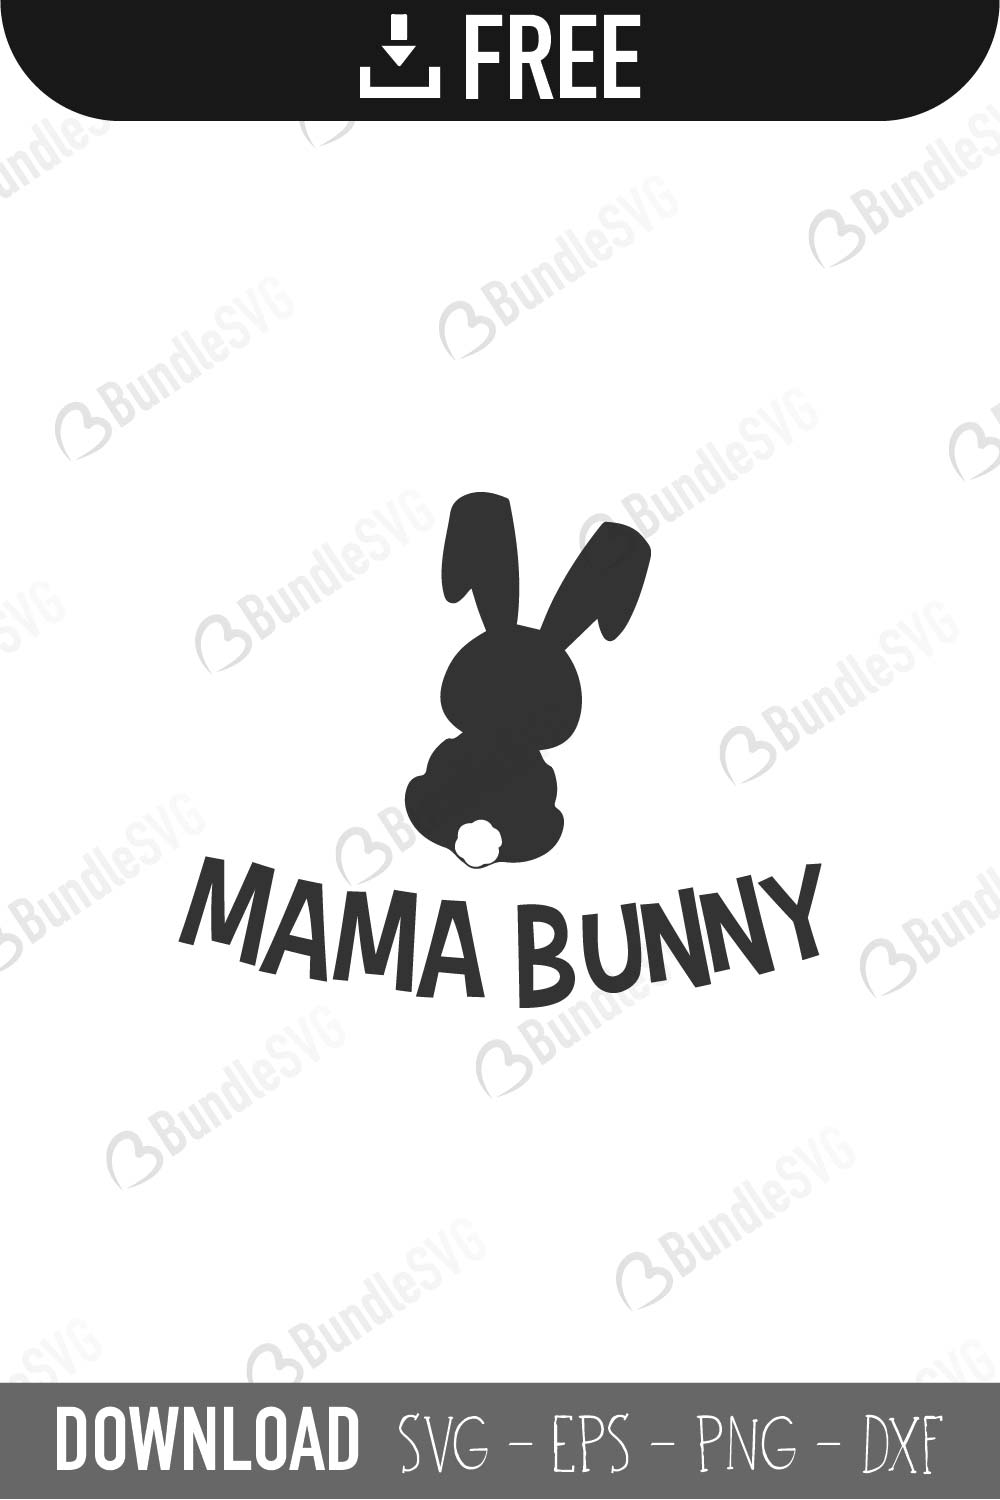 Download Mama Bunny Svg Cut Files Free Download Bundlesvg